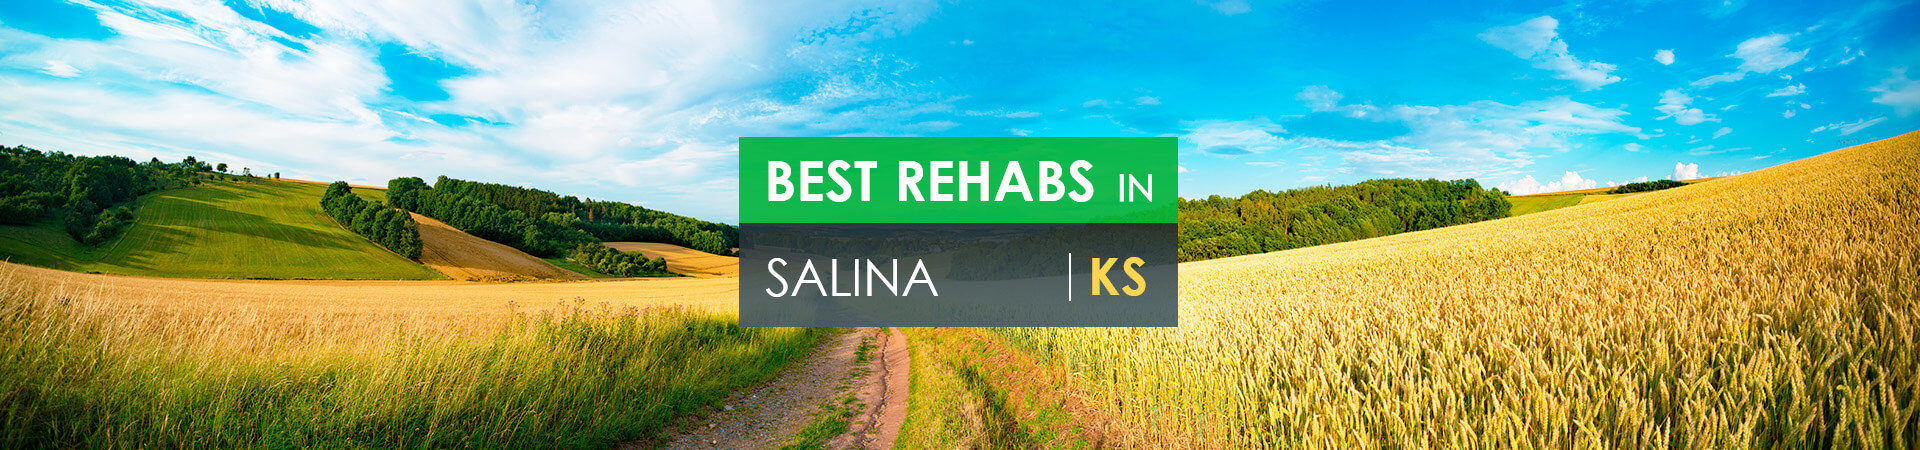 Best rehabs in Salina, KS